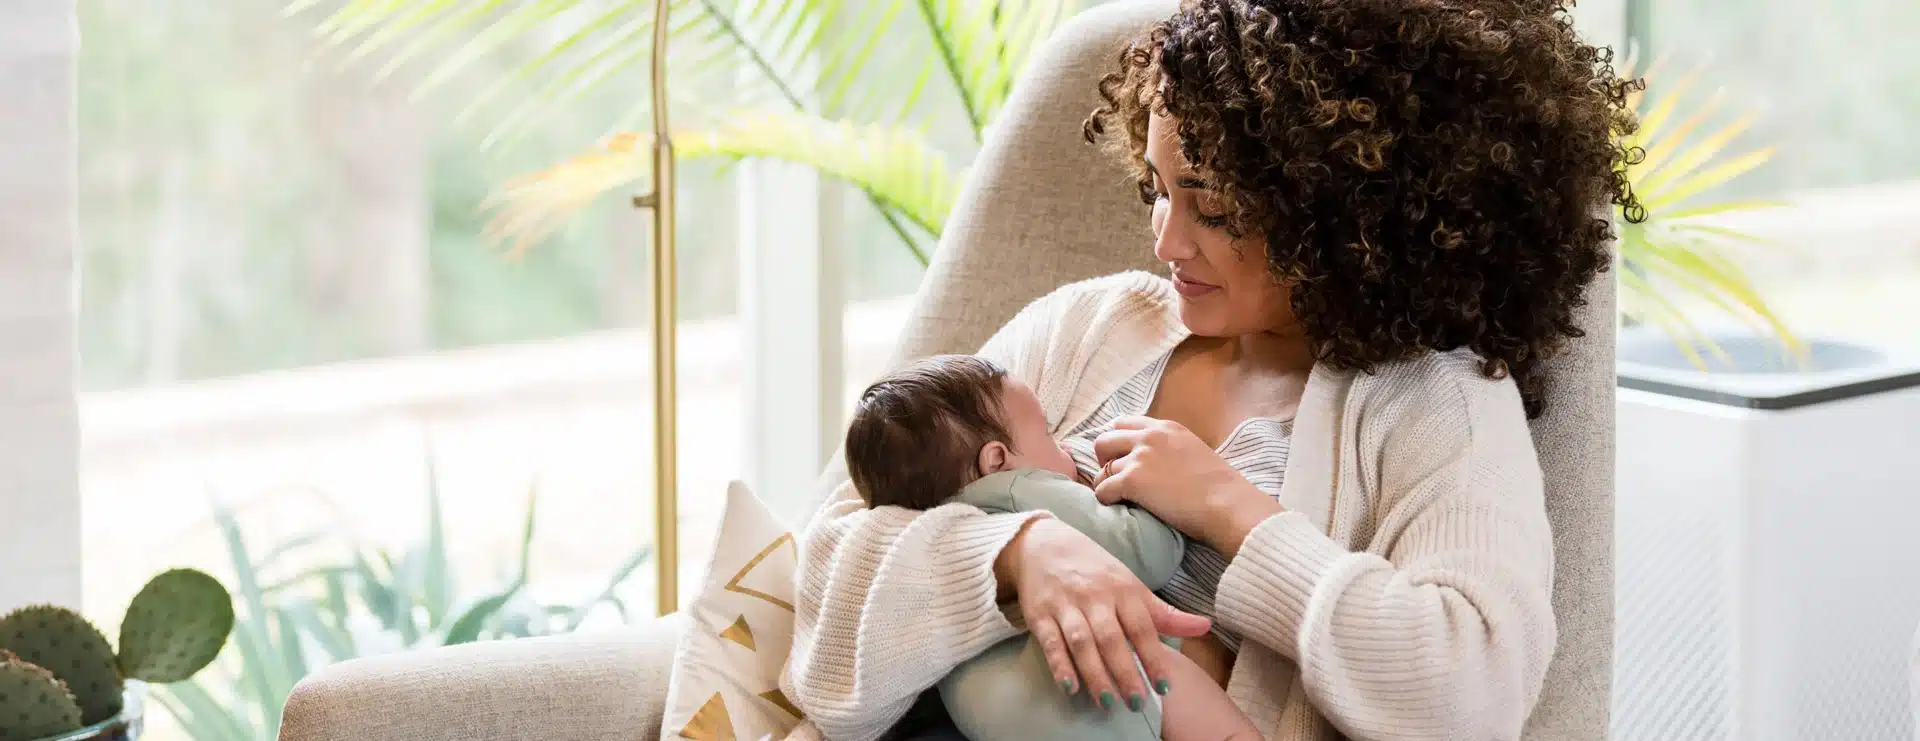 Can I Take Hair, Skin, And Nail Vitamins While Breastfeeding?